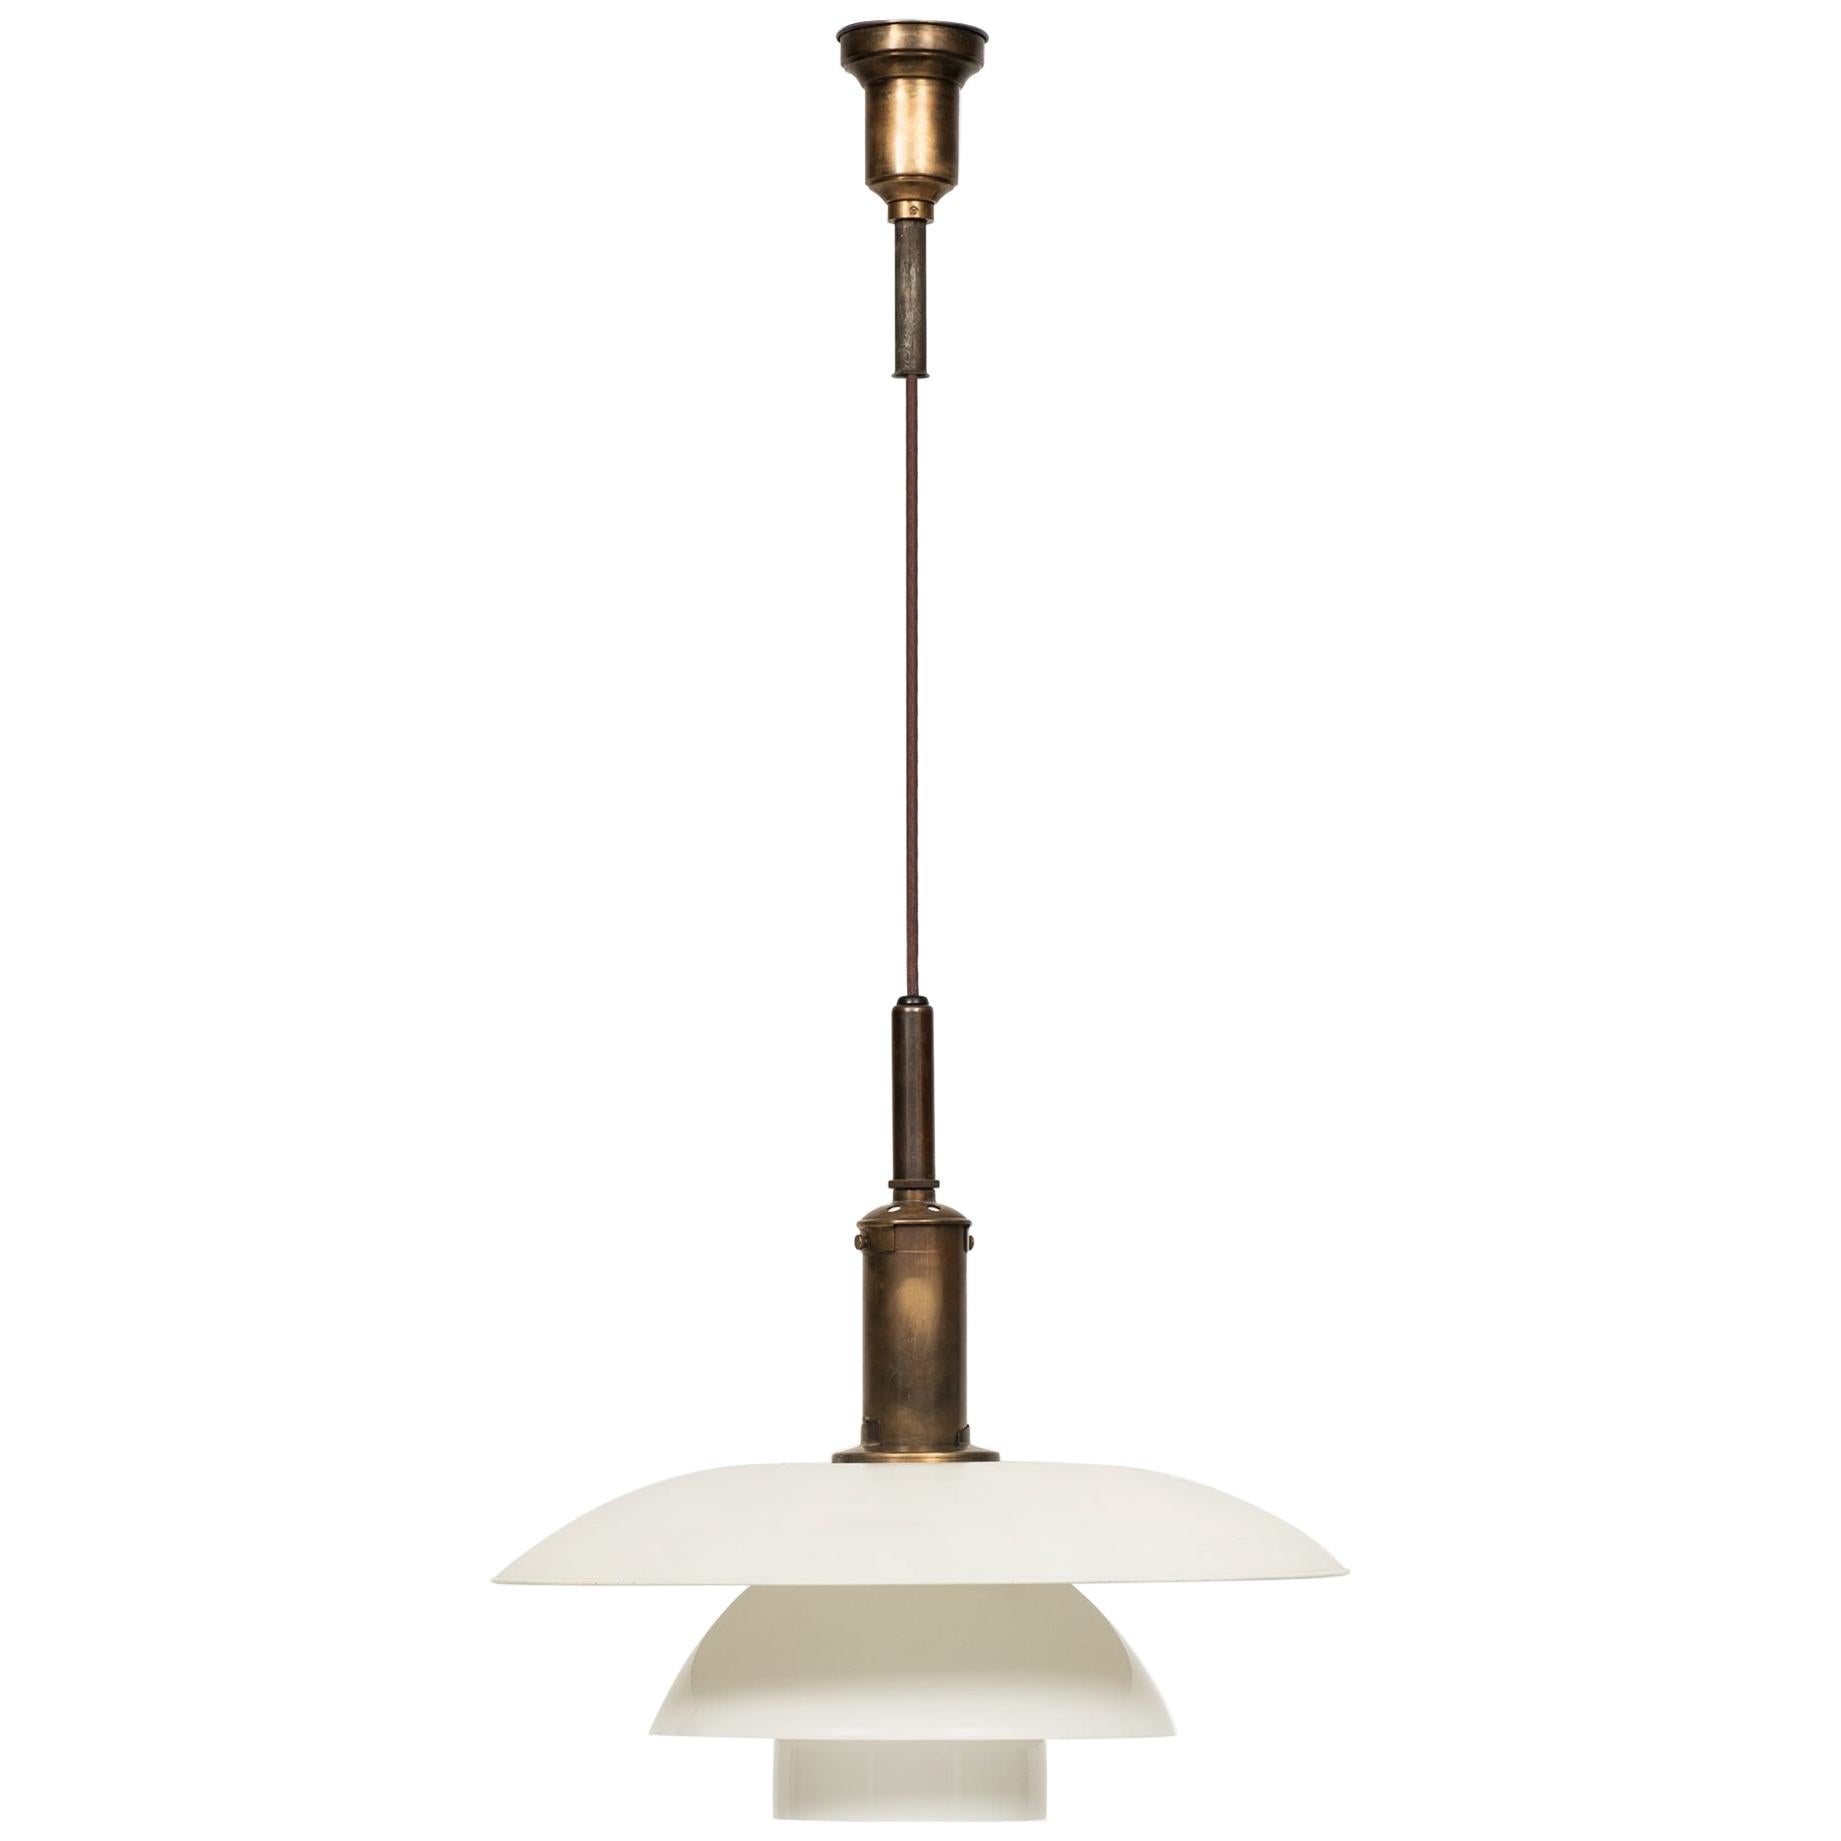 Poul Henningsen Ceiling Lamp Model PH-5/5 Produced by Louis Poulsen in Denmark